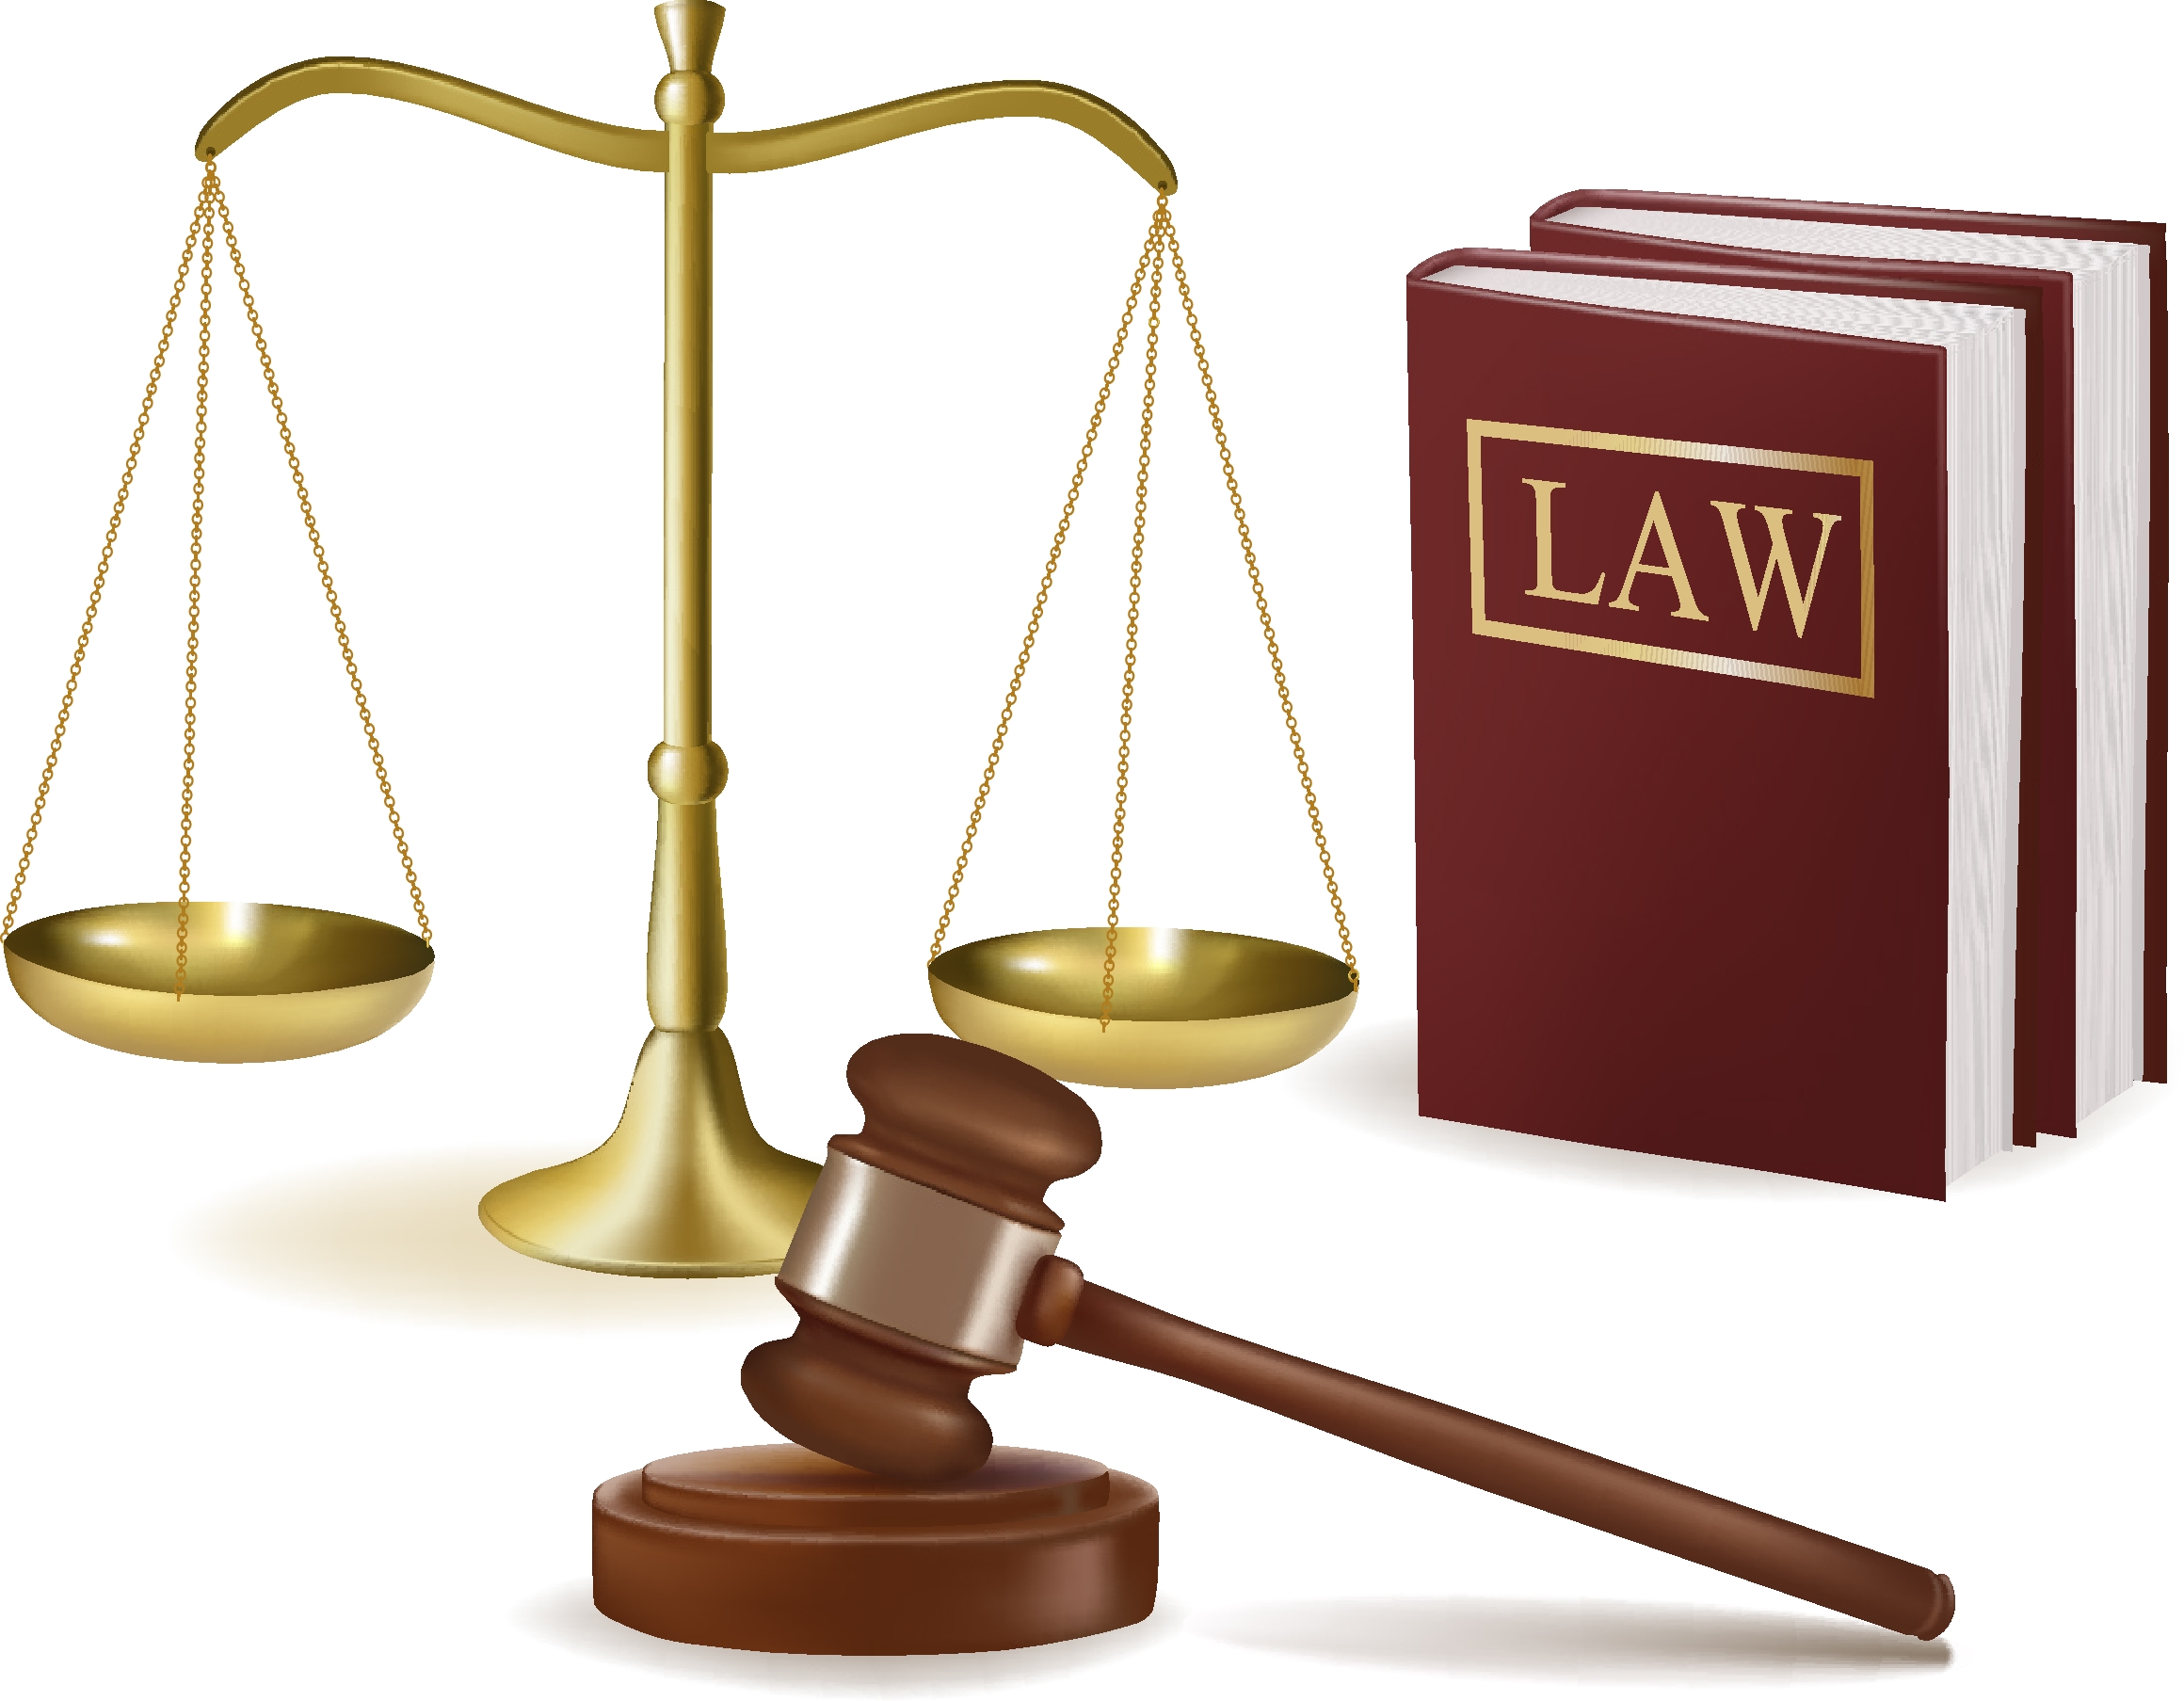 Laws clipart legal assistance. Business law image clip